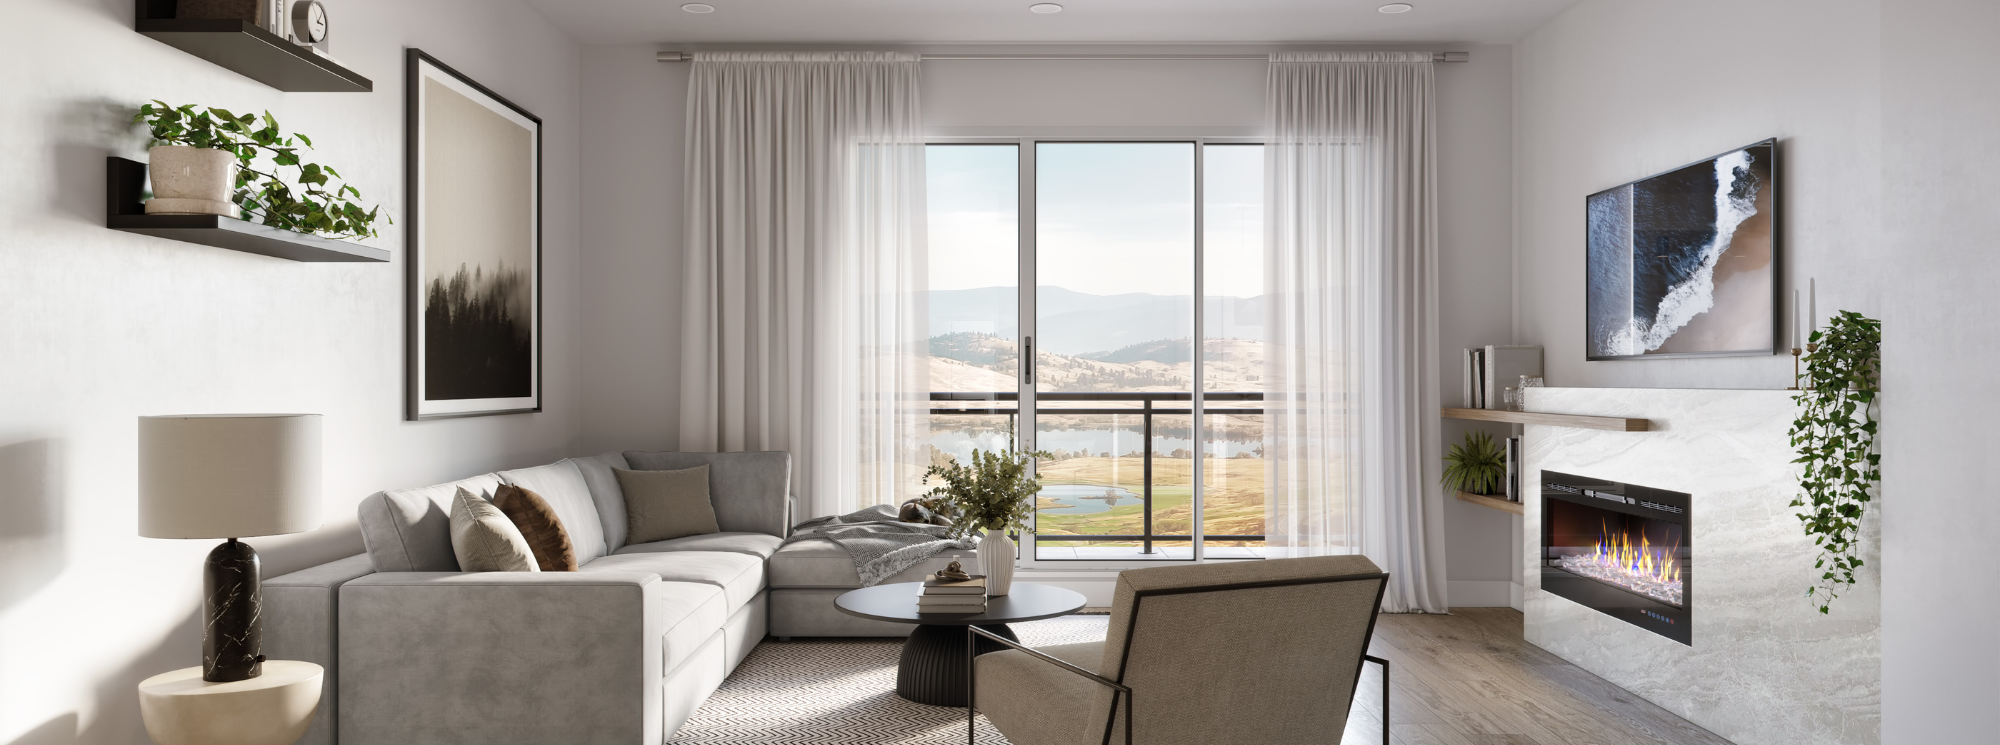 vista-living room render